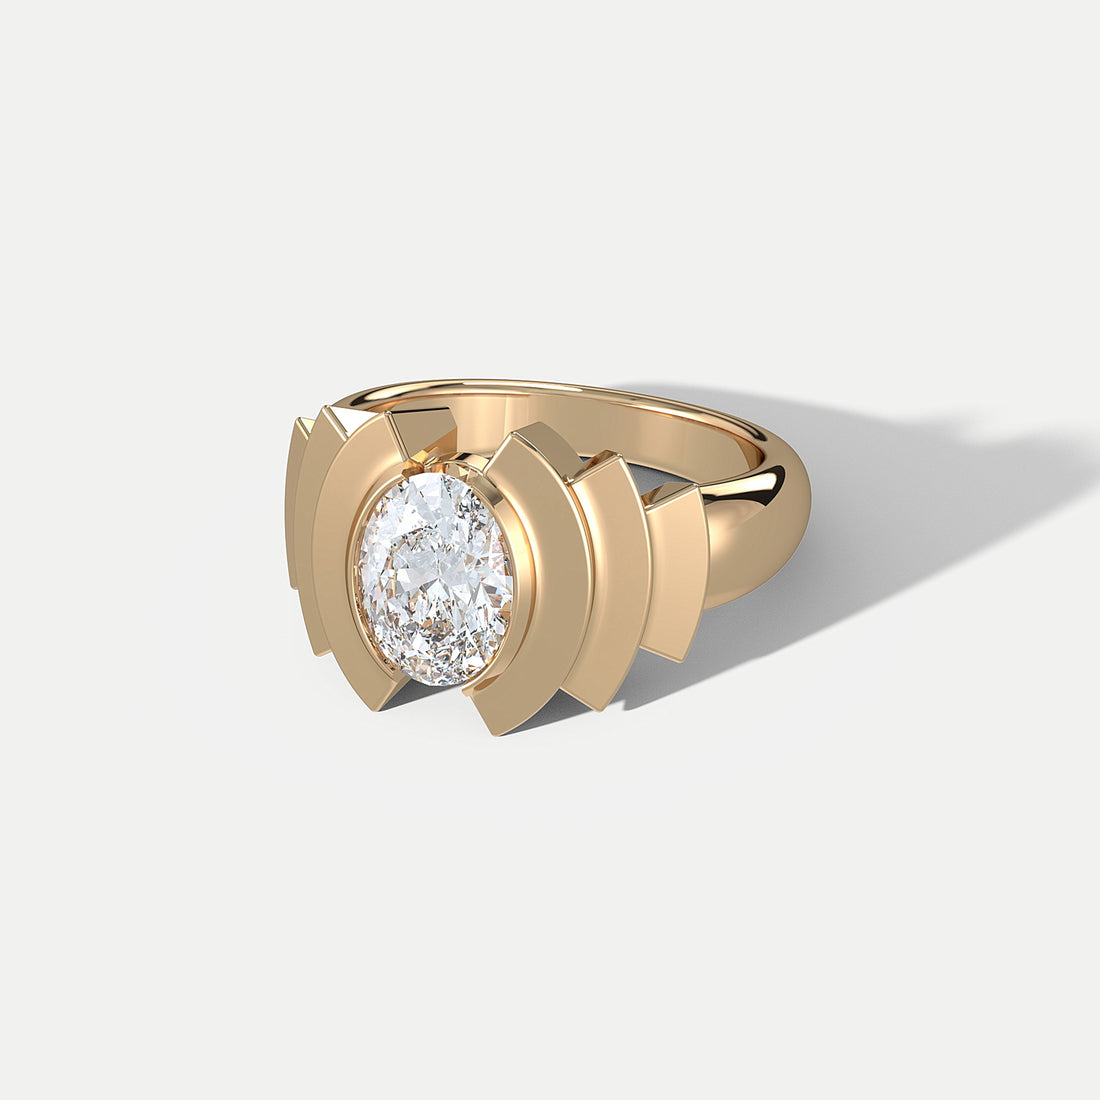  Oval Diamond Beat Gold Ring by Hannah Martin | The Cut London